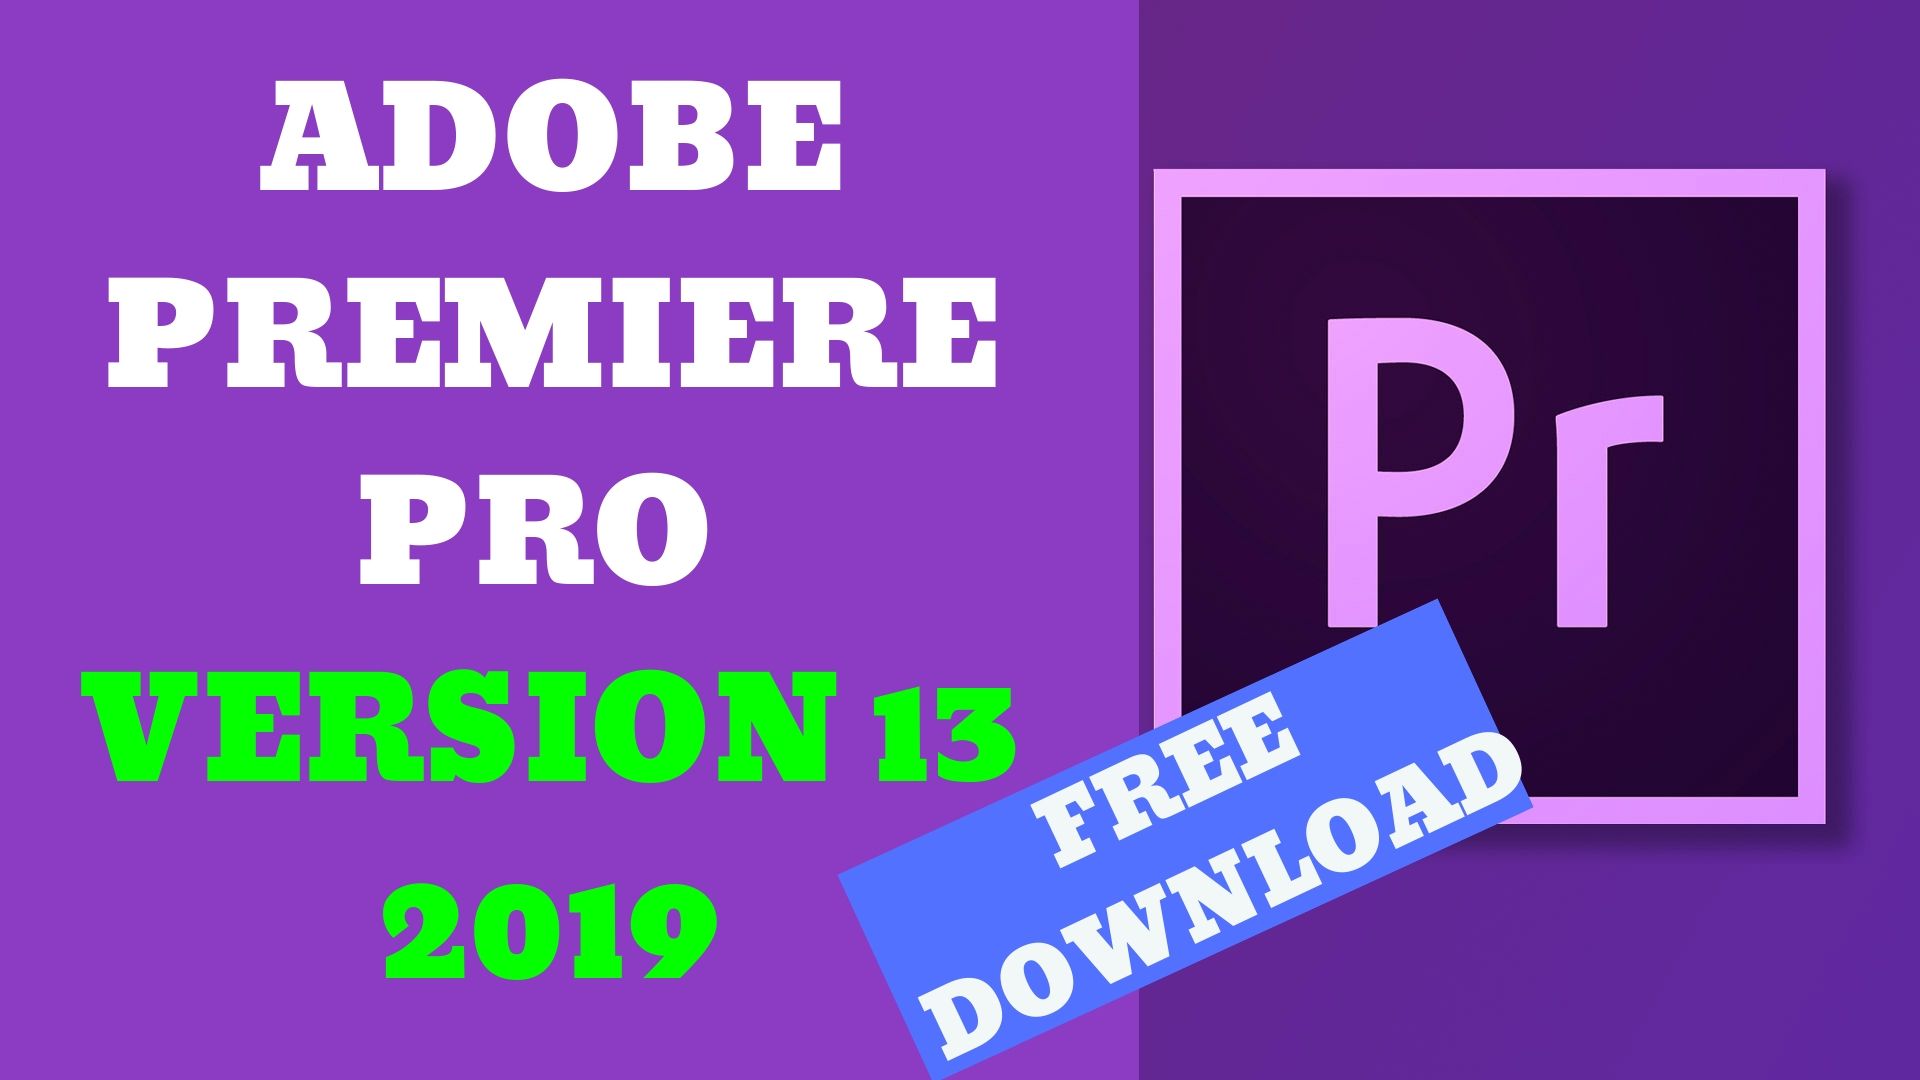 Adobe premiere software download